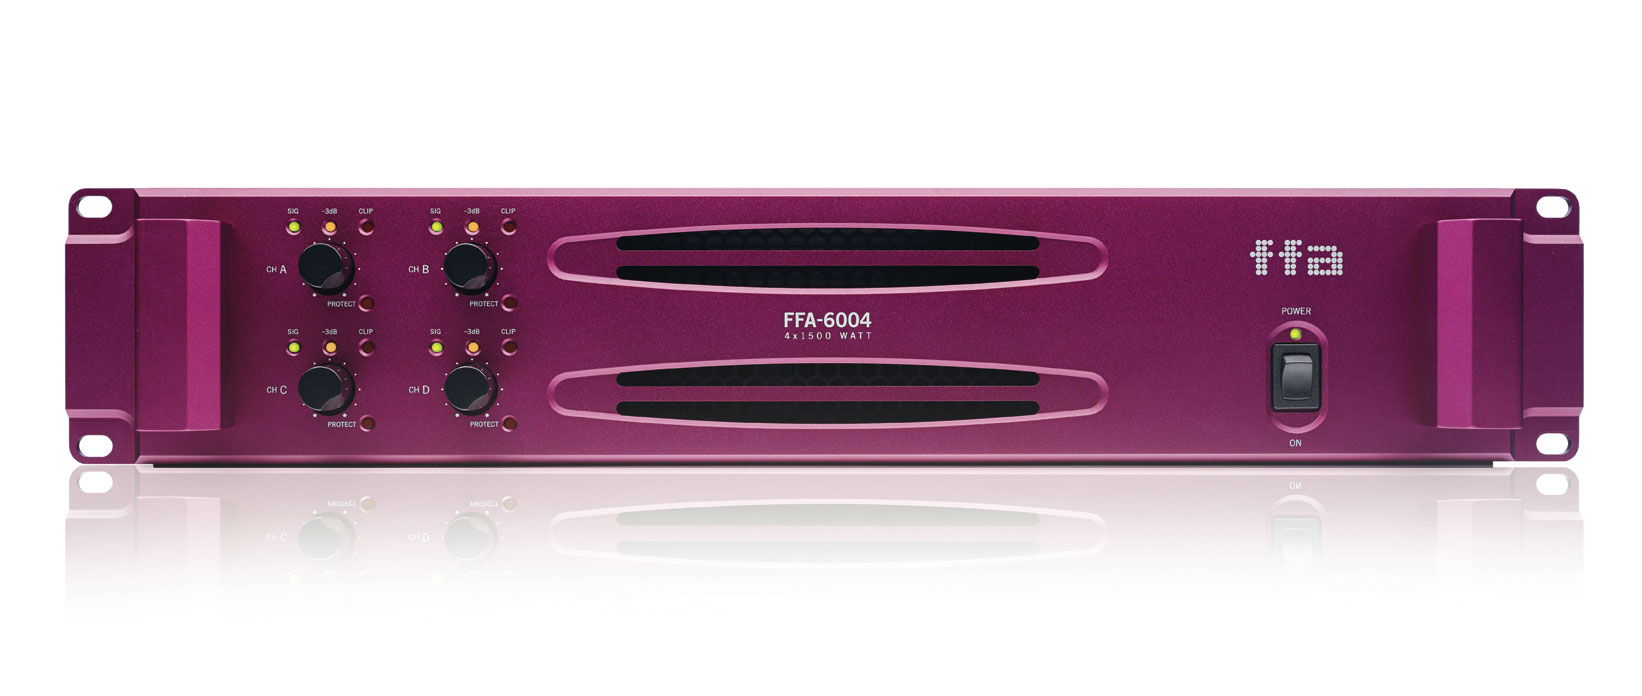 FFA-6004 G2 DSP Product Image